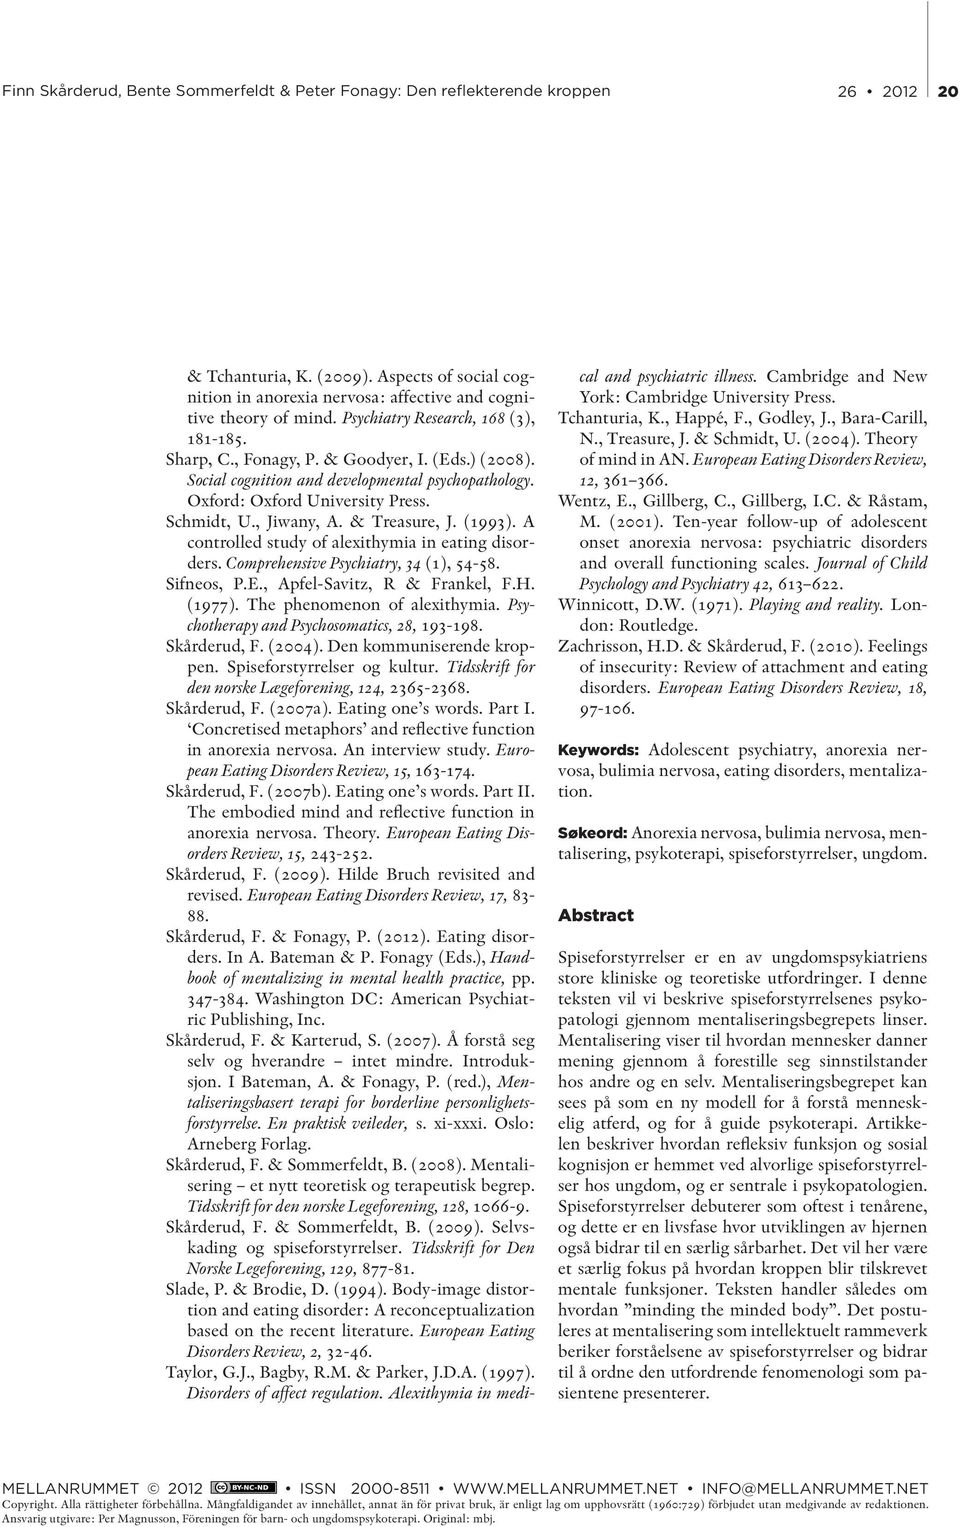 Comprehensive Psychiatry, 34 (1), 54-58. Sifneos, P.E., Apfel-Savitz, R & Frankel, F.H. (1977). The phenomenon of alexithymia. Psychotherapy and Psychosomatics, 28, 193-198. Skårderud, F. (2004).